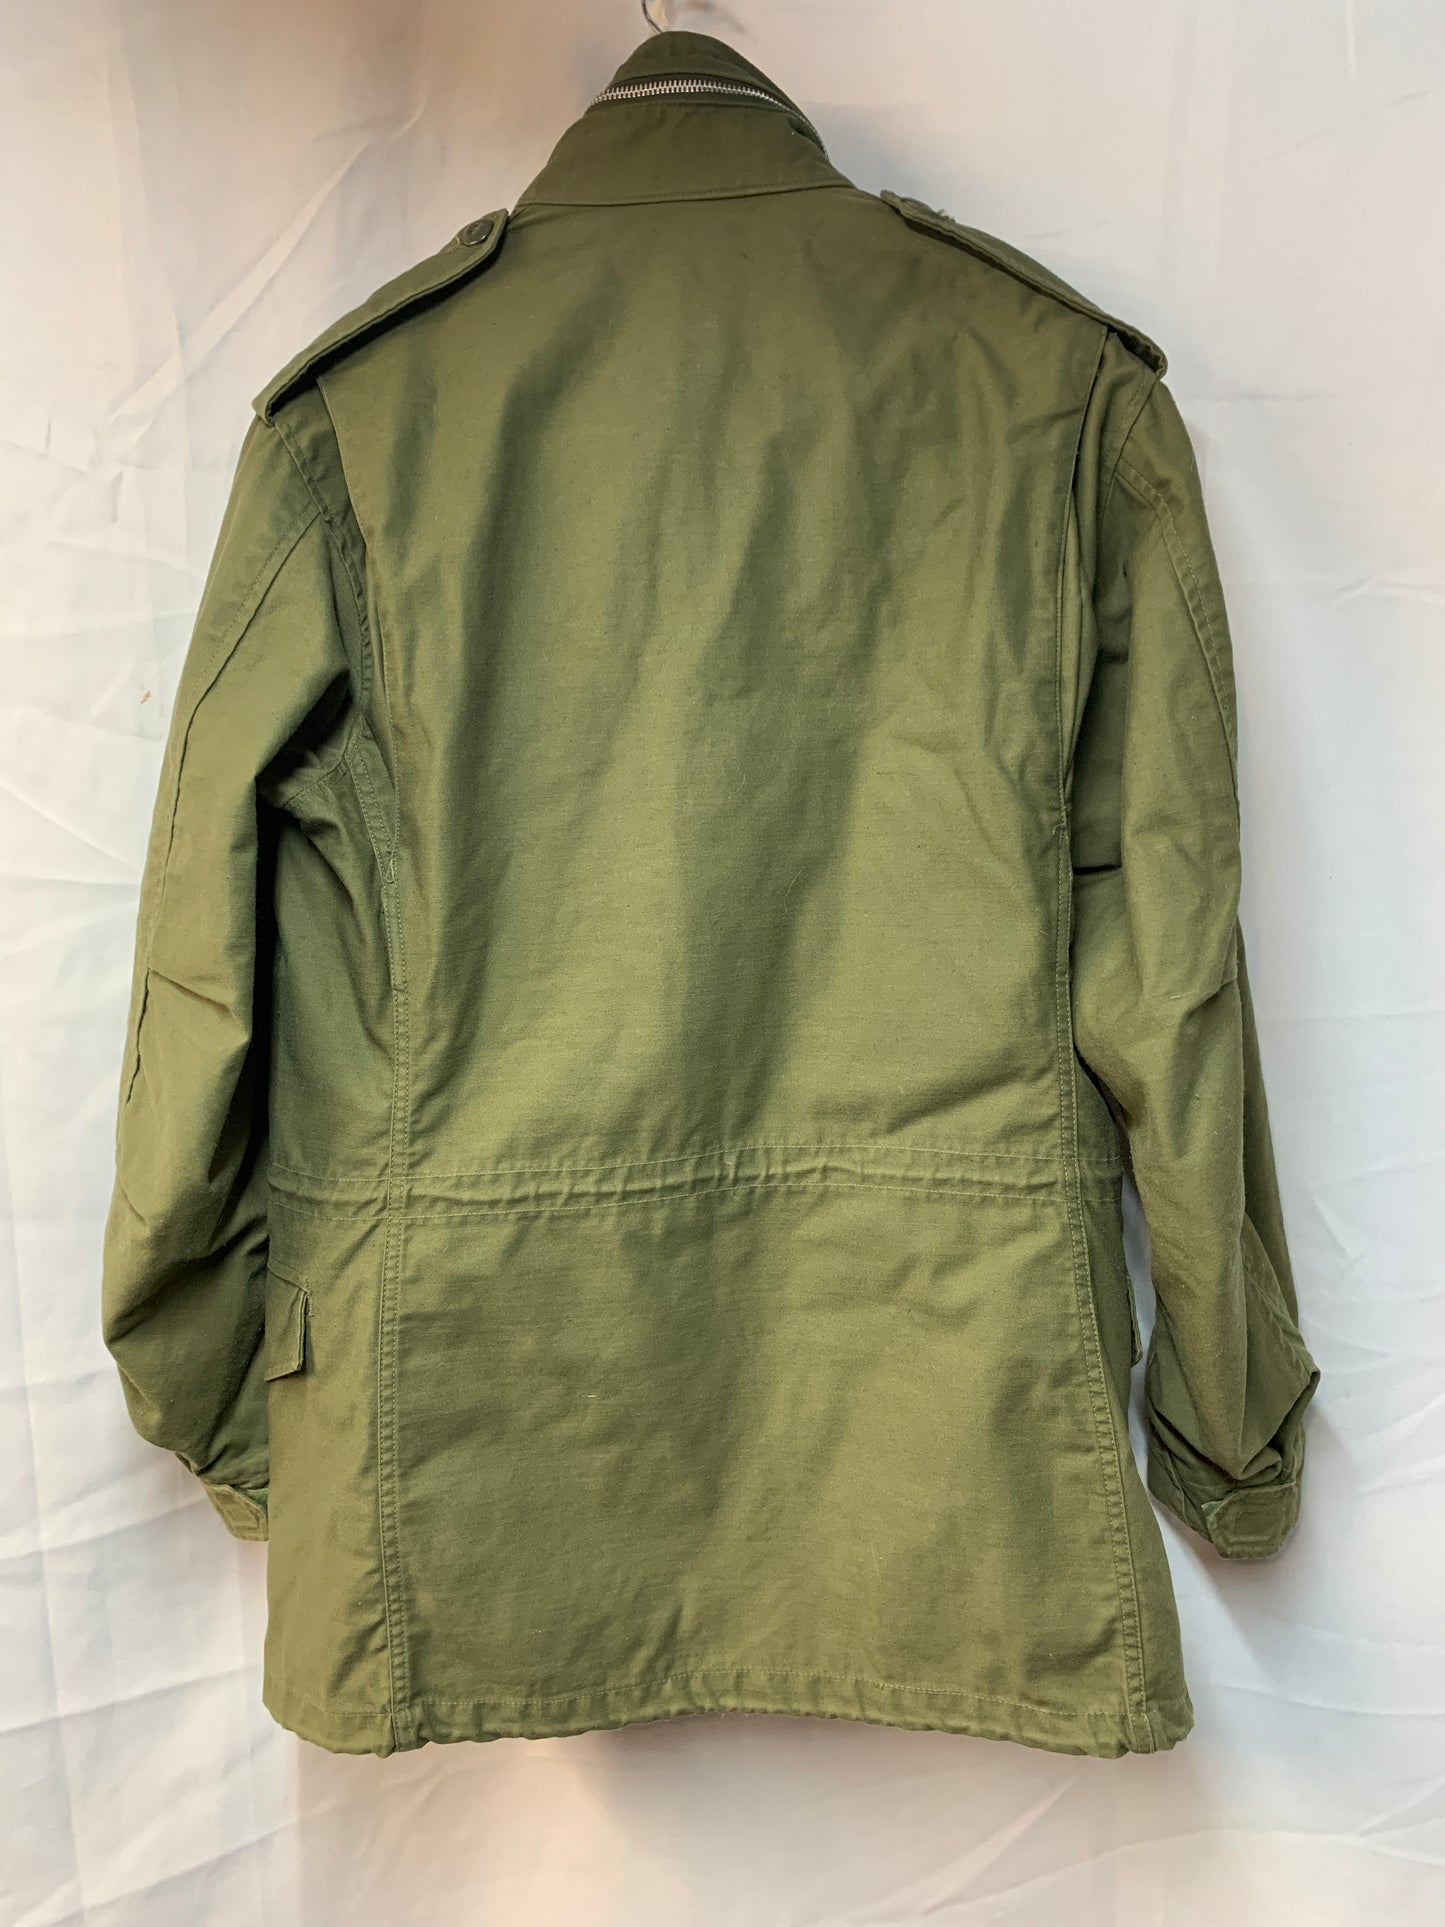 Vintage 1967 M-65 Field Coat / Jacket - OG 107 - Long Small - Minty!